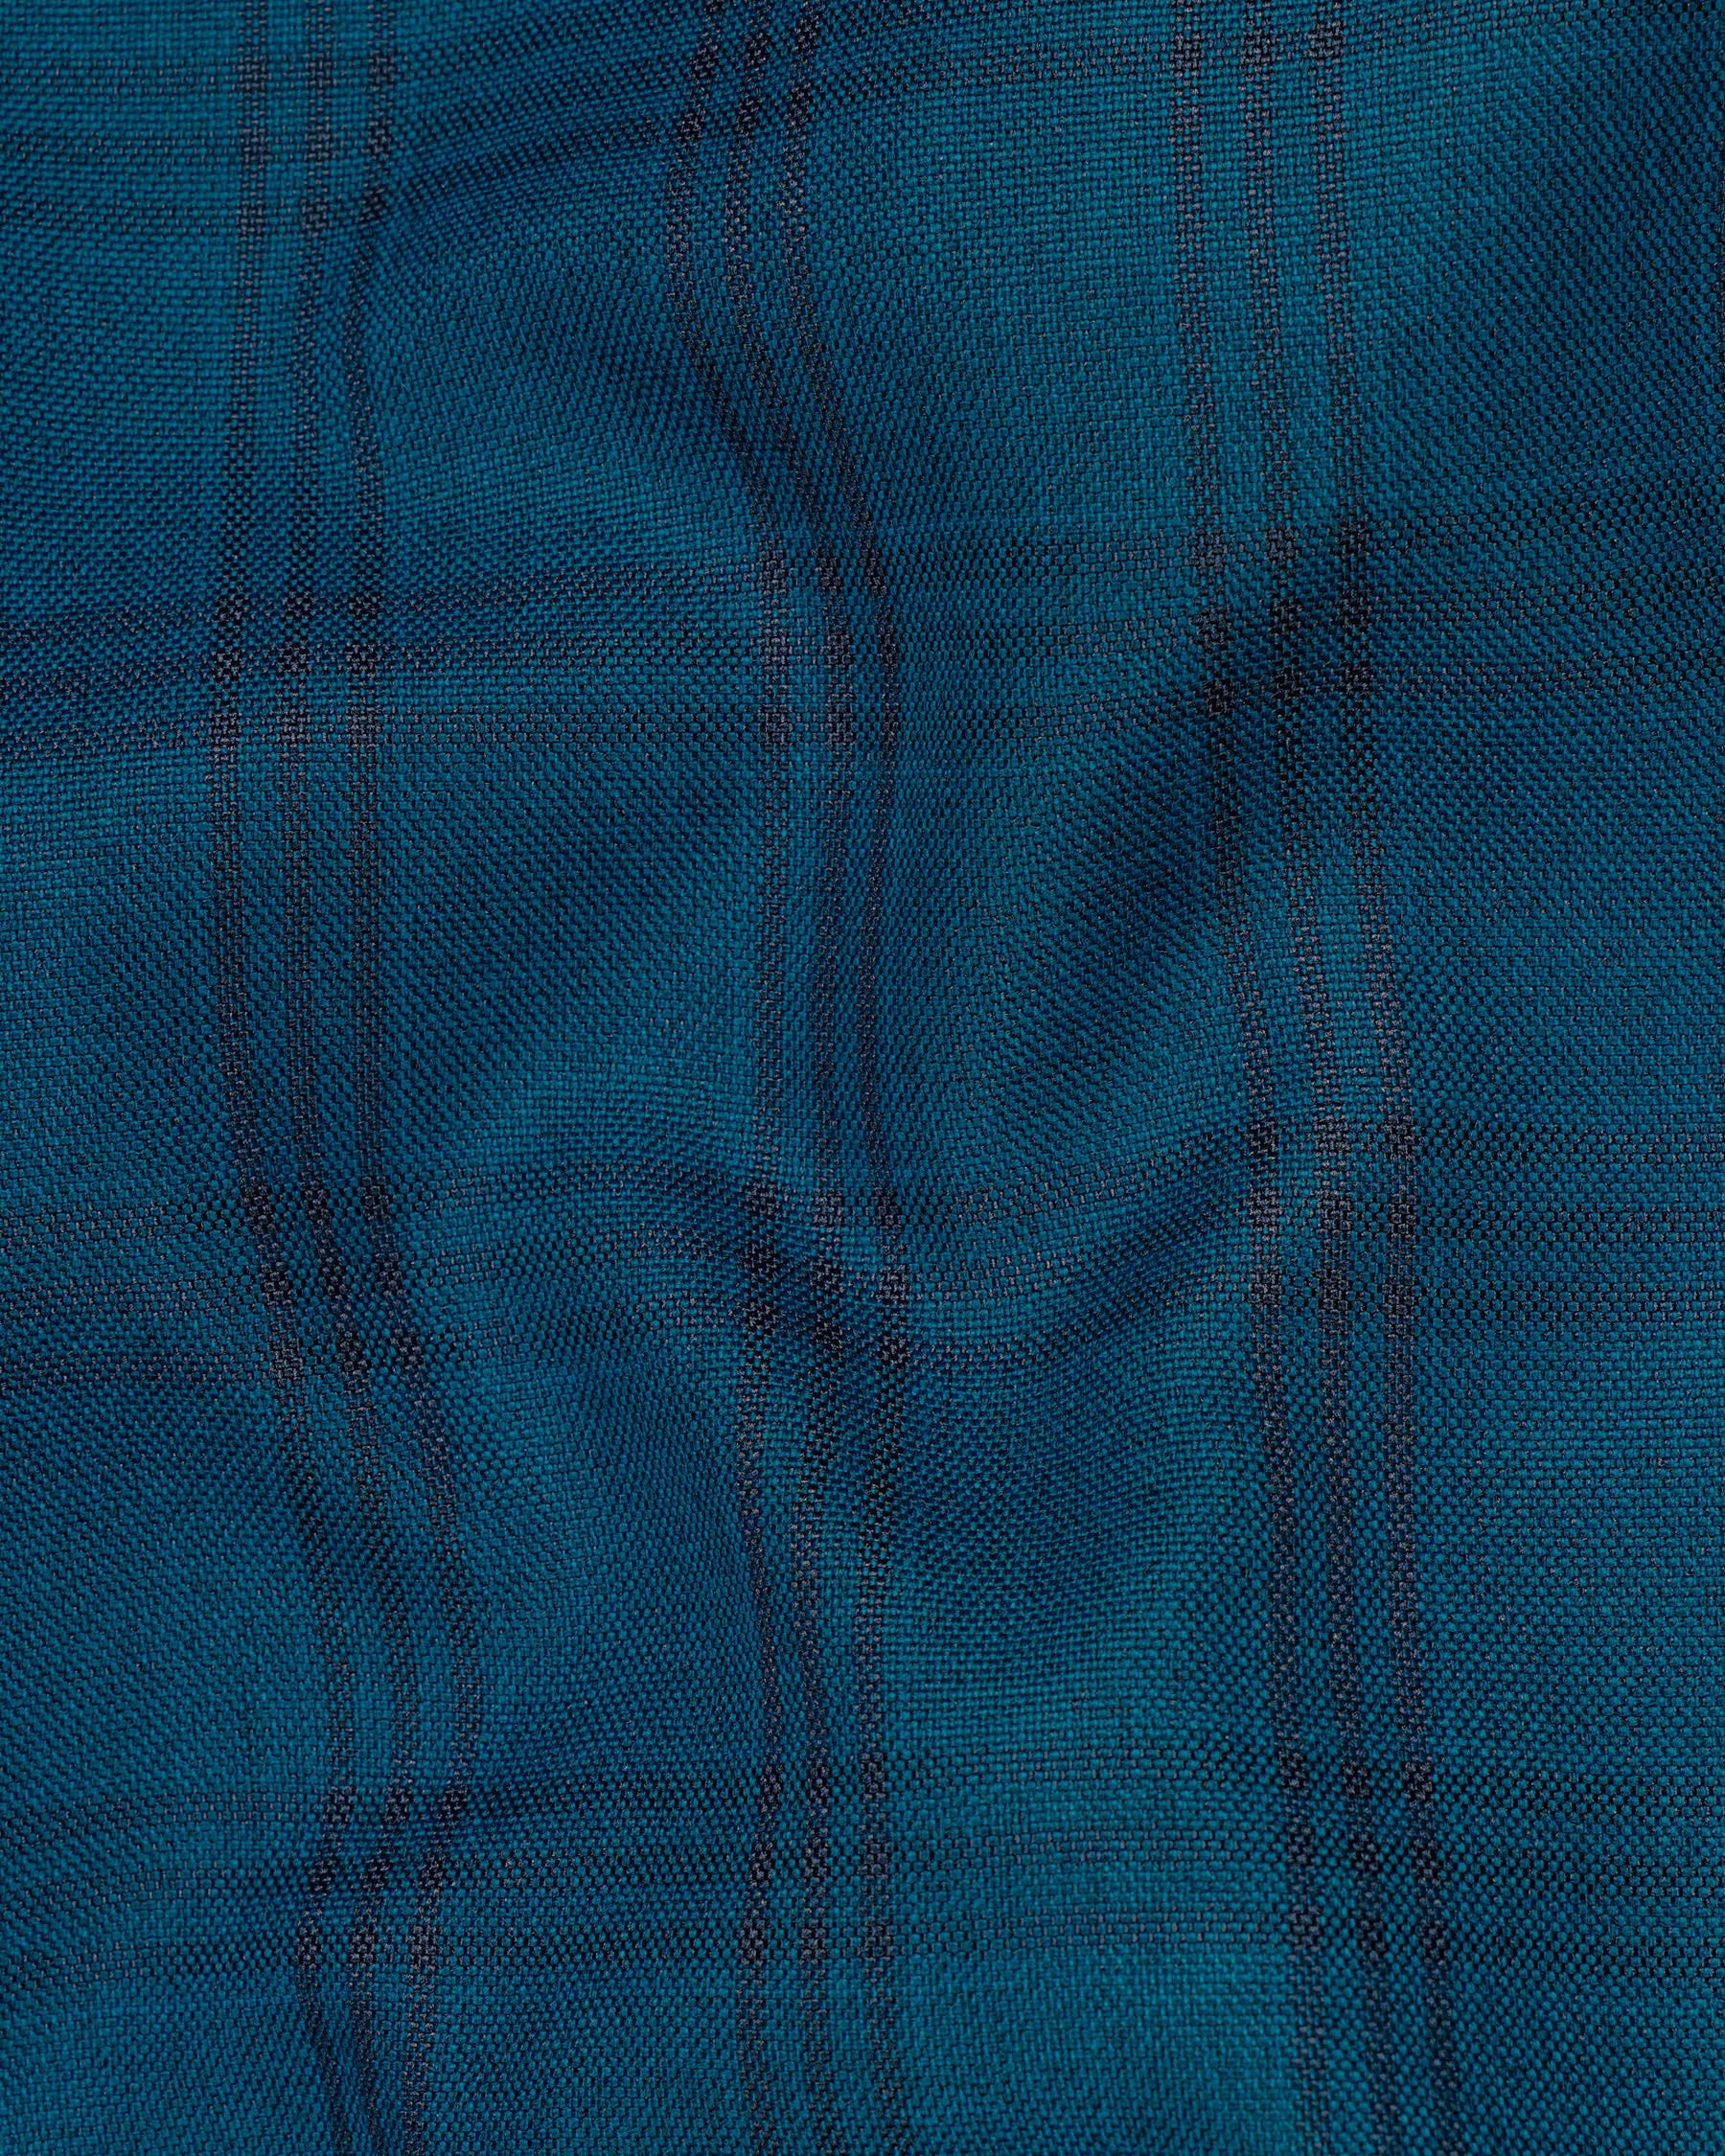 Sapphire Blue With Black Plaid Waistcoat V1993-36, V1993-38, V1993-40, V1993-42, V1993-44, V1993-46, V1993-48, V1993-50, V1993-52, V1993-54, V1993-56, V1993-58, V1993-60